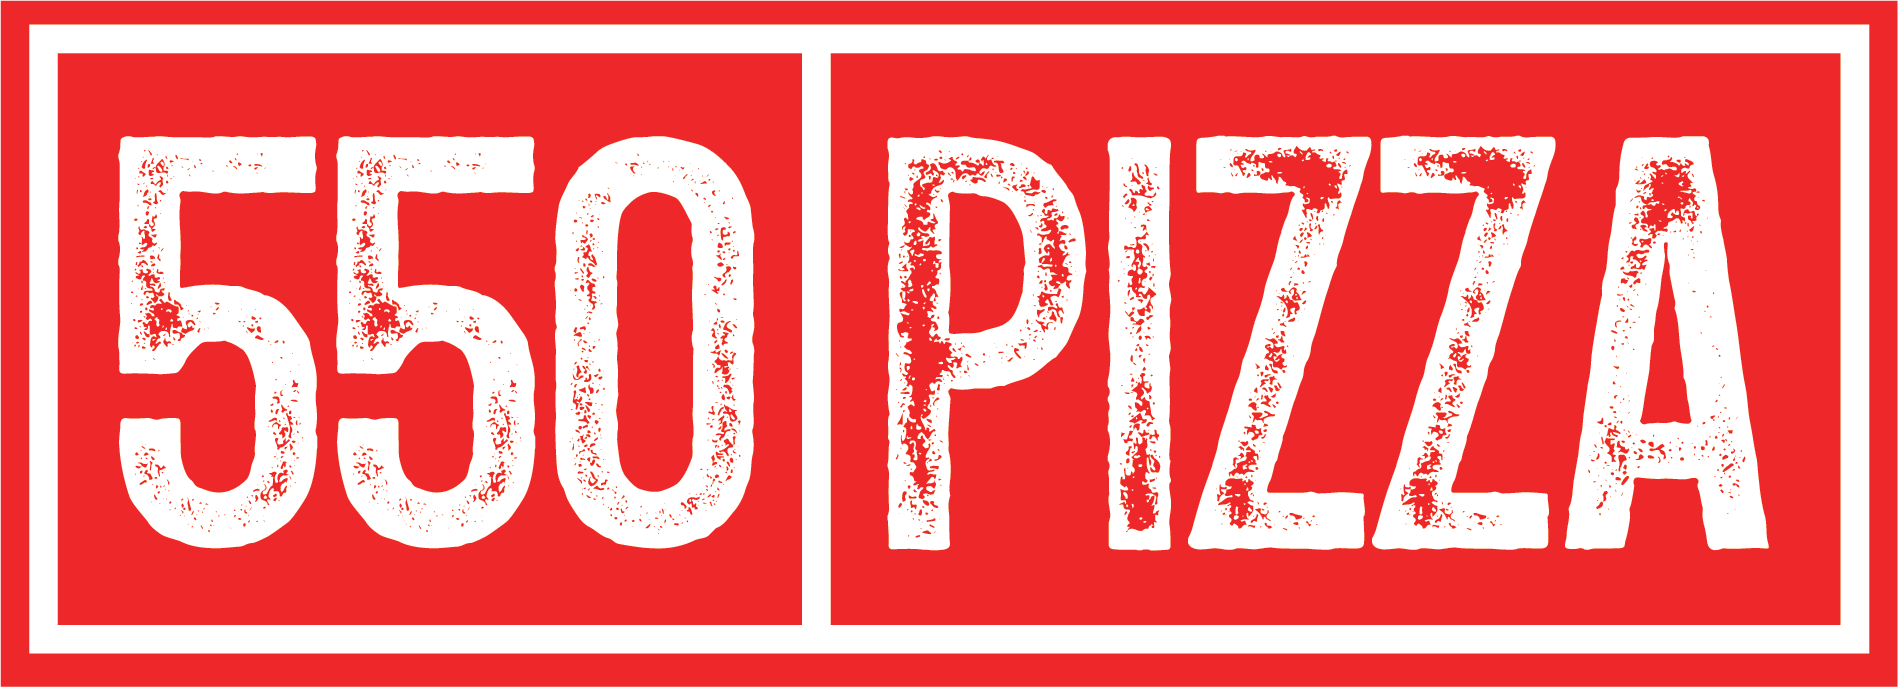 550 Pizza Logo